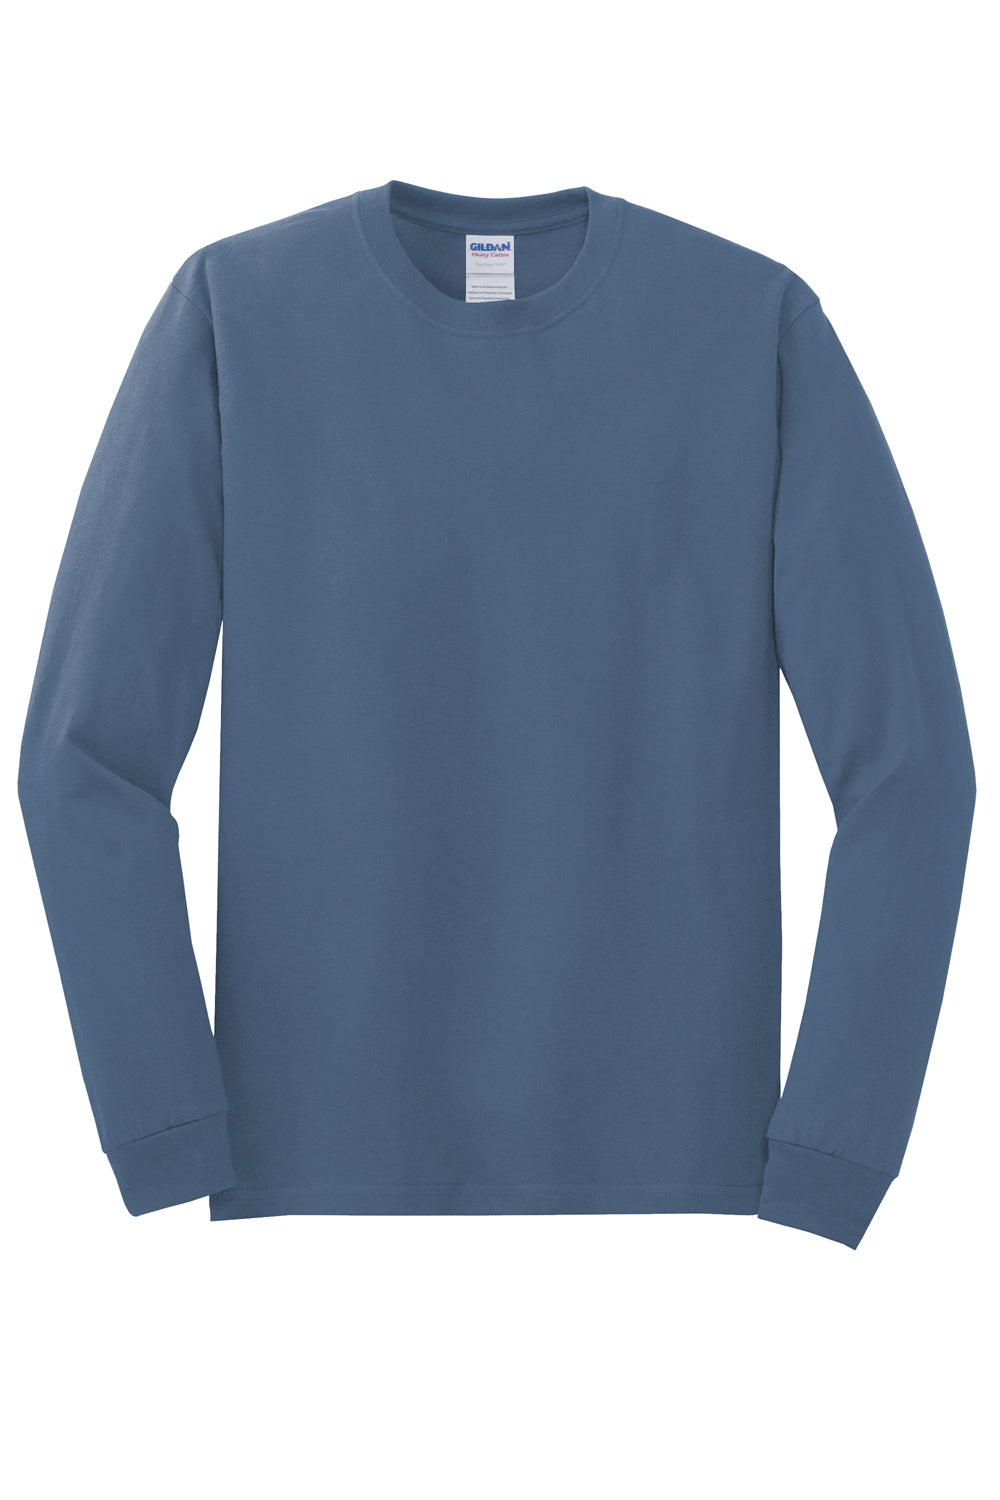 Gildan 5400/G540 Mens Indigo Blue Long Sleeve Crewneck T-Shirt ...